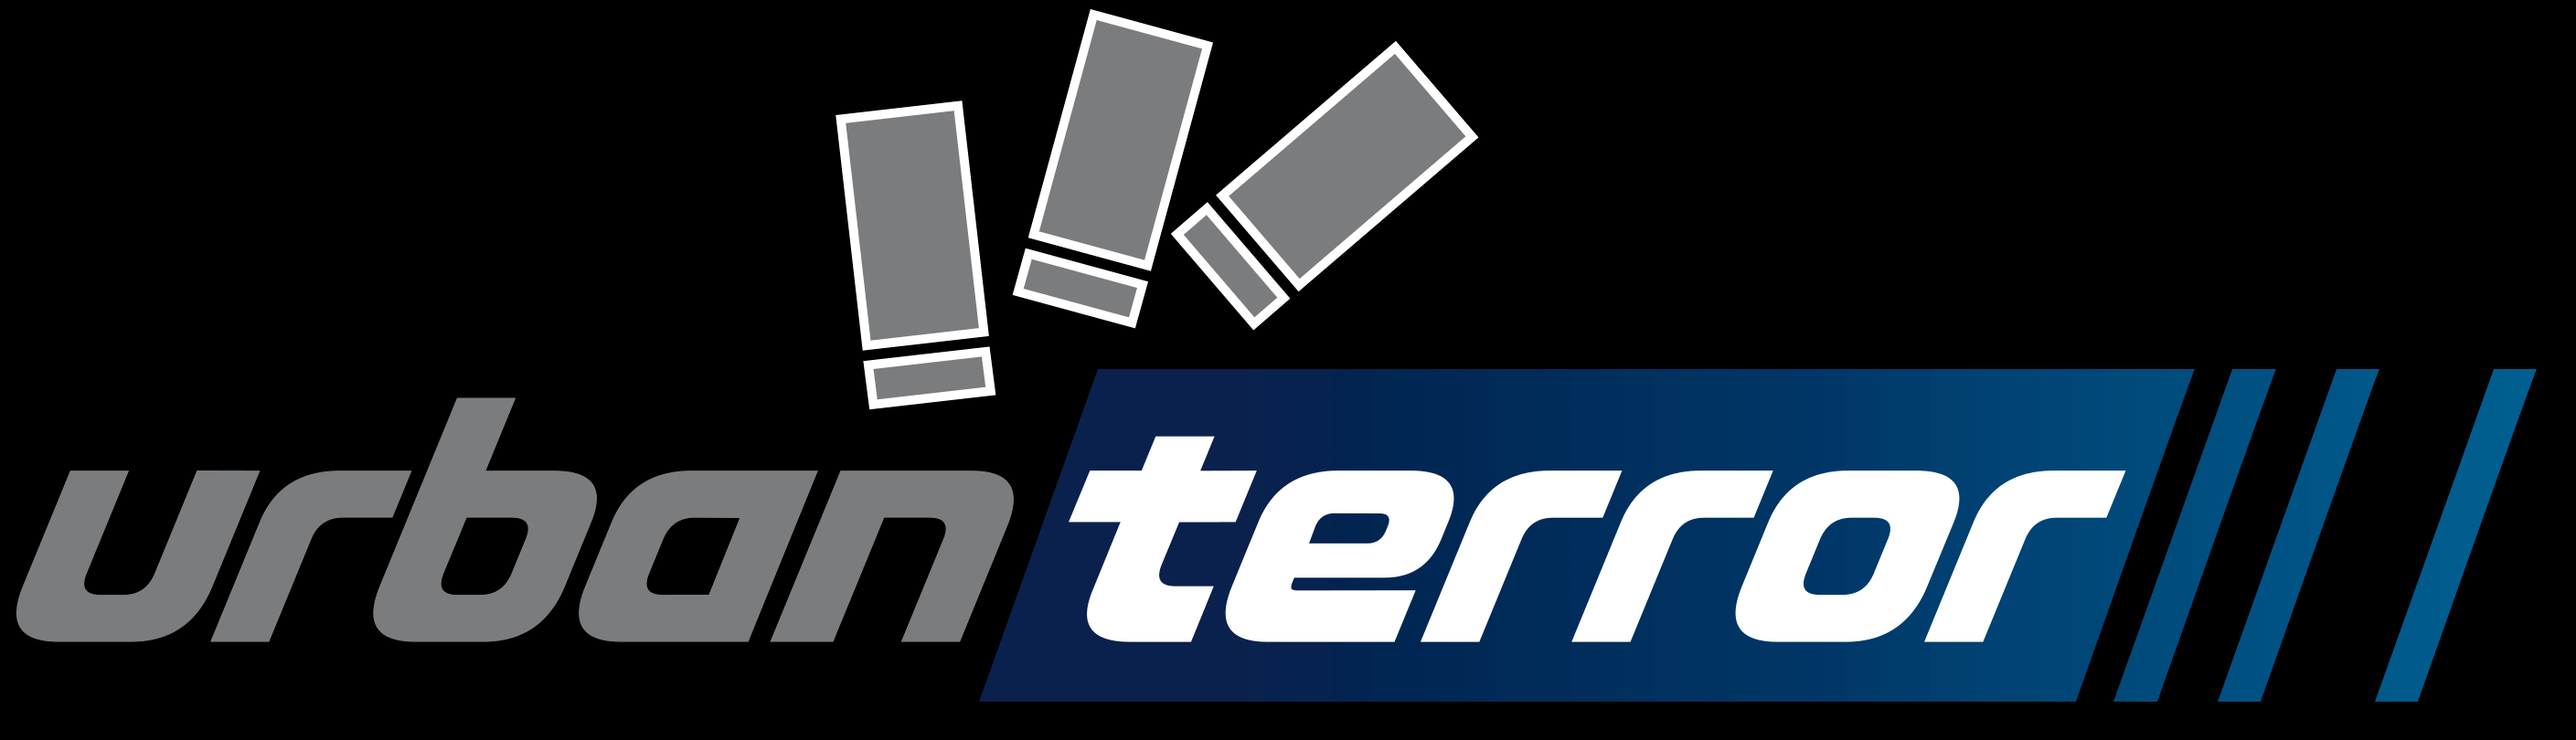 Terror Logo - Urban Terror Support : Images : Logos